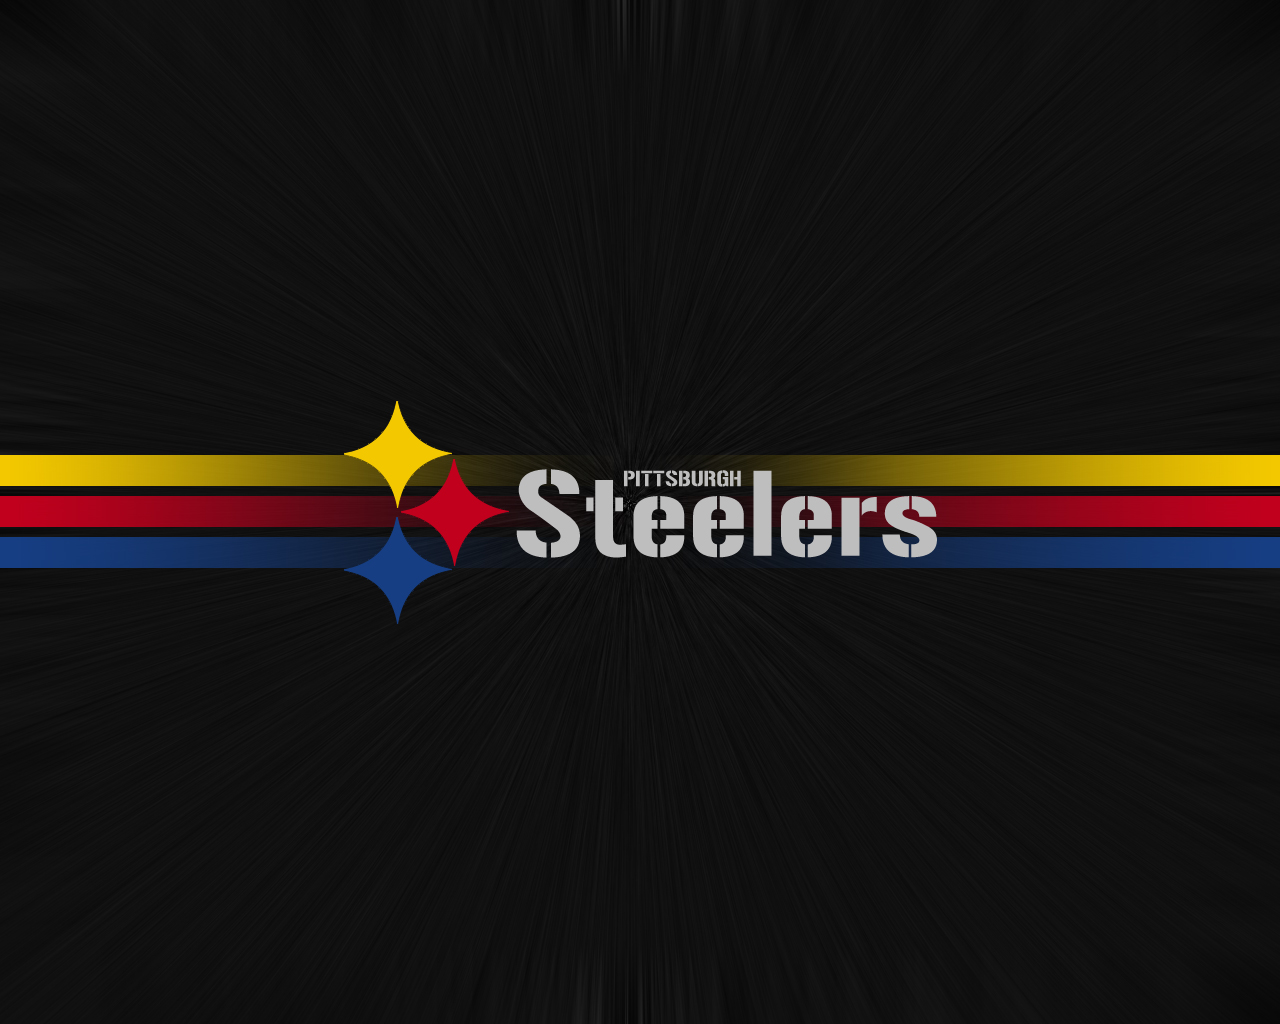 NFL wallpaper nfl logo wallpaper